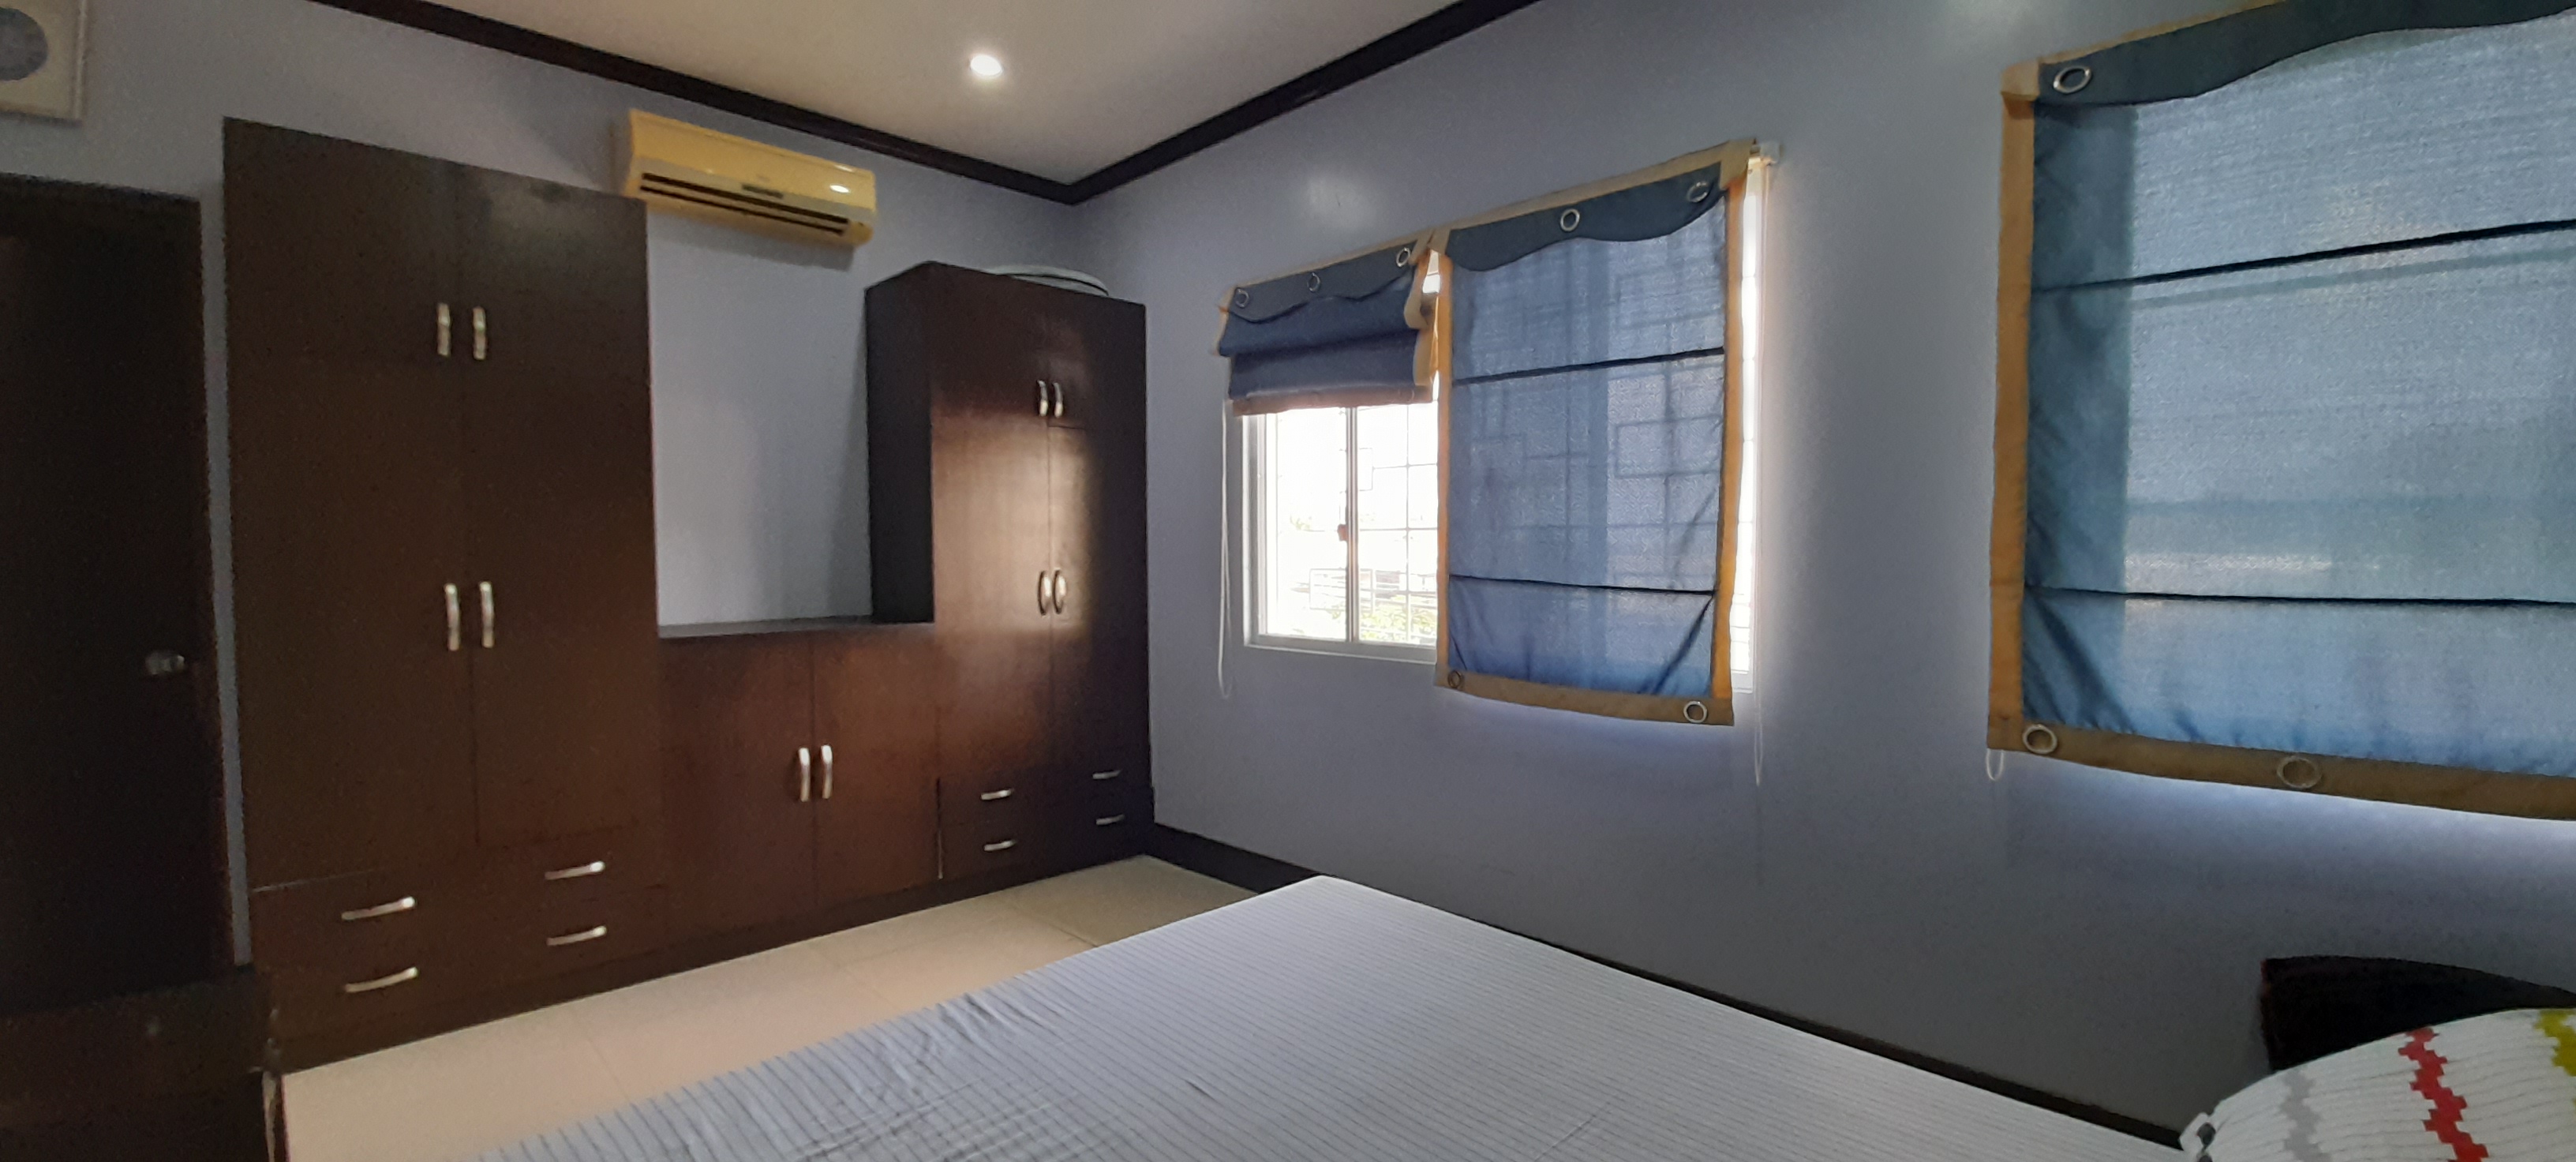 5-bedroom-furnished-house-in-talamban-cebu-city-cebu